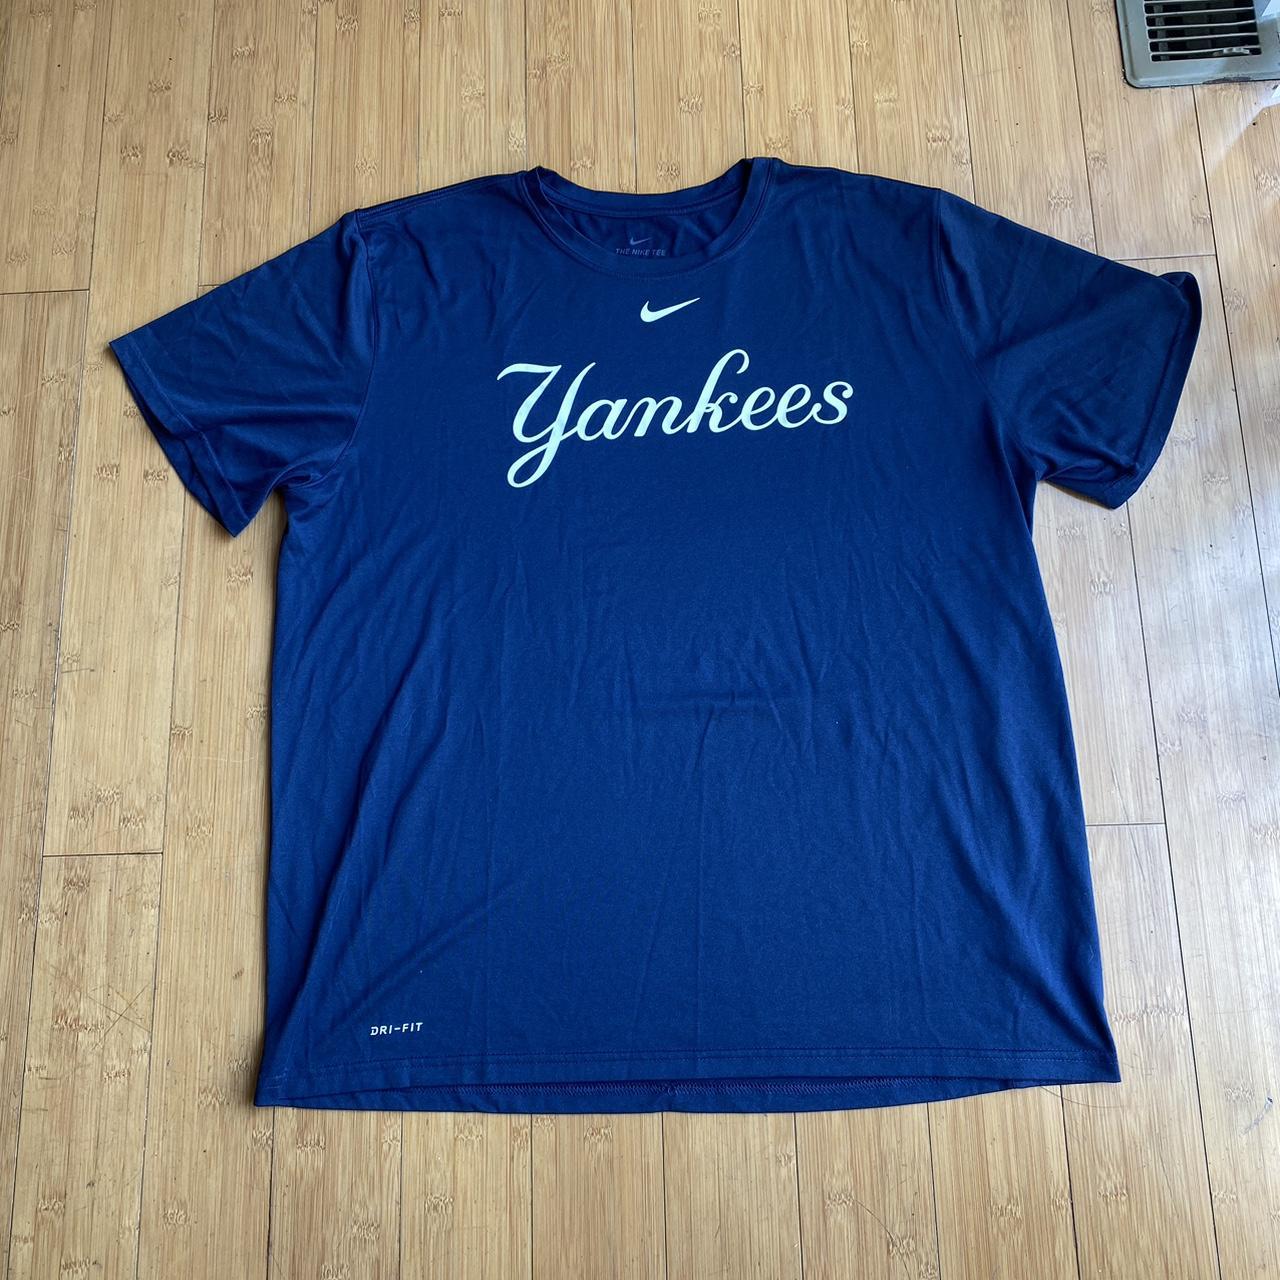 Nike Dri-FIT Early Work (MLB New York Yankees) Men's T-Shirt.